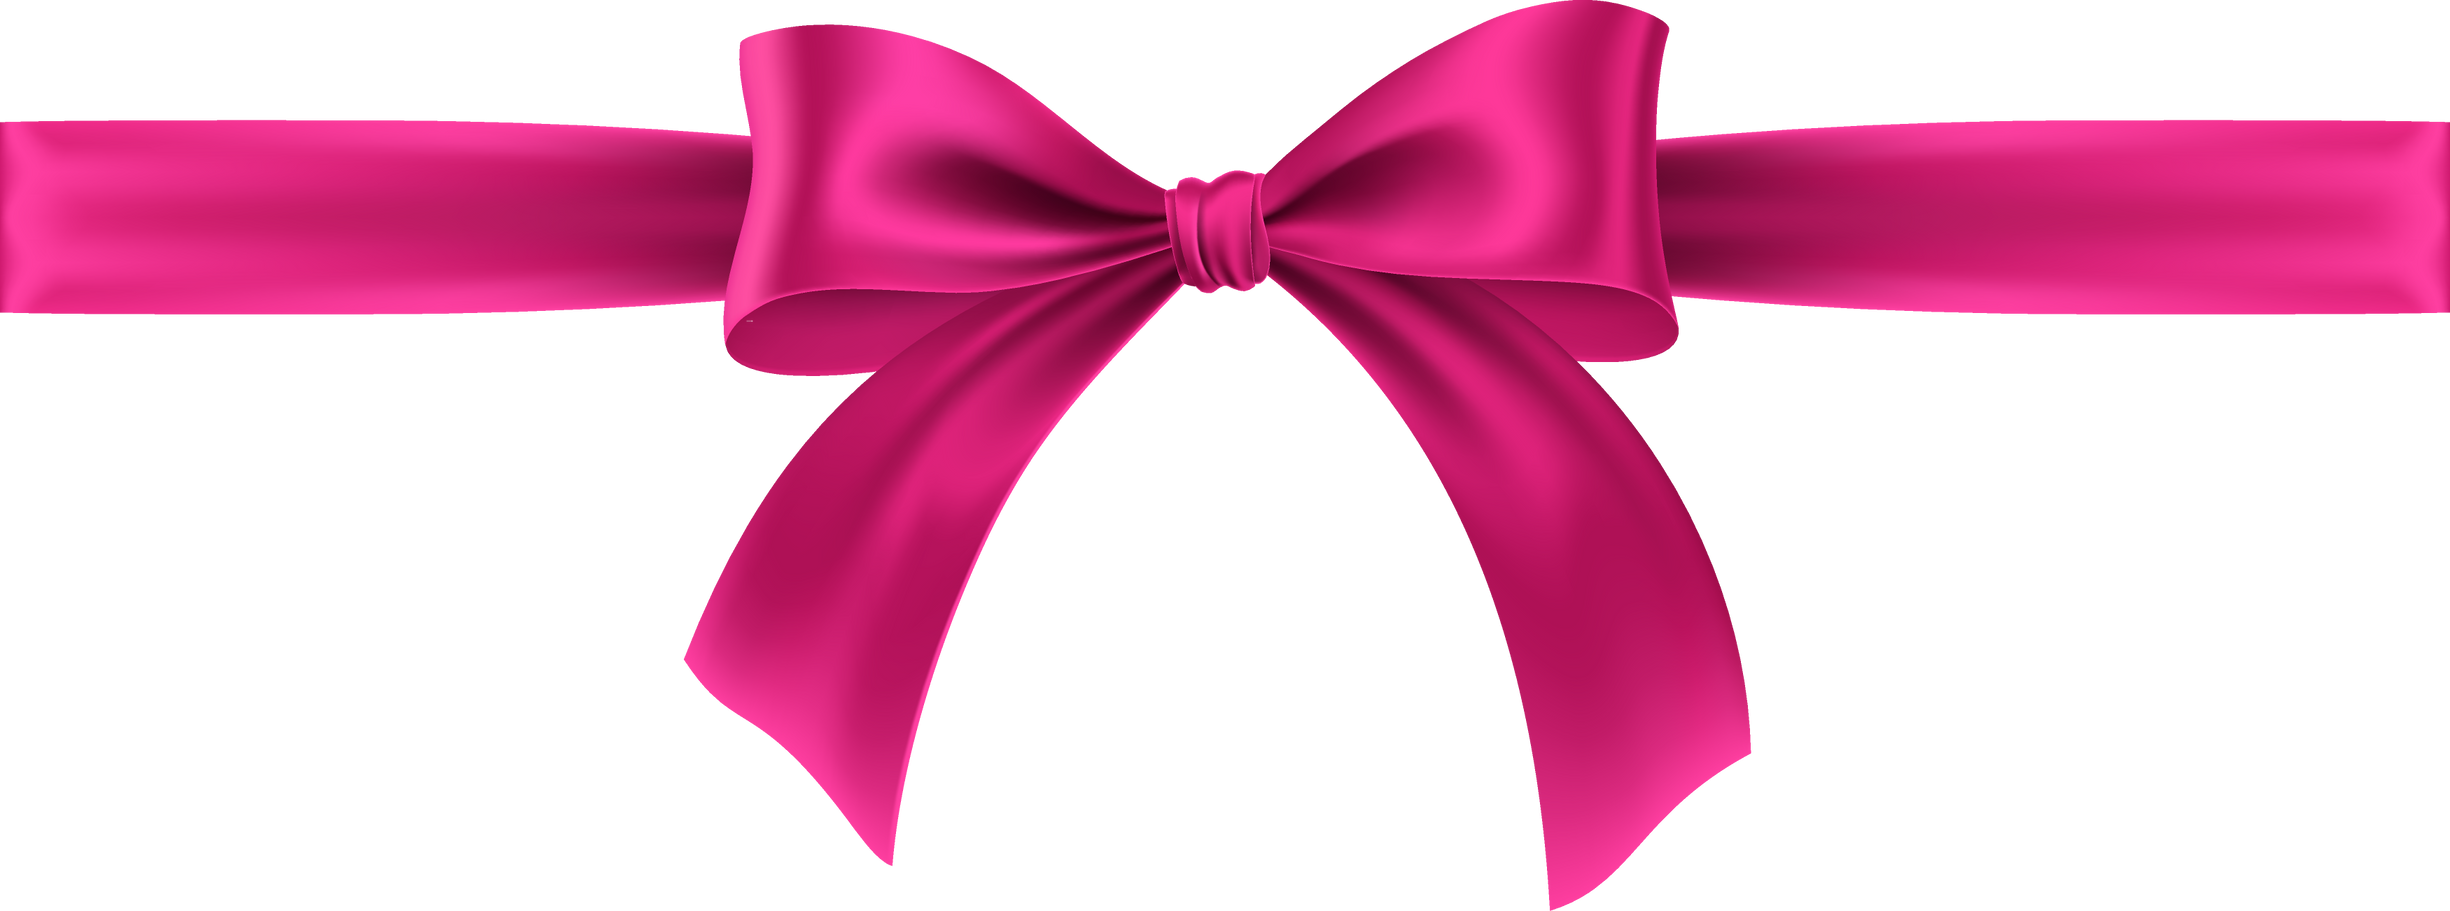 Pink Bow Illustration